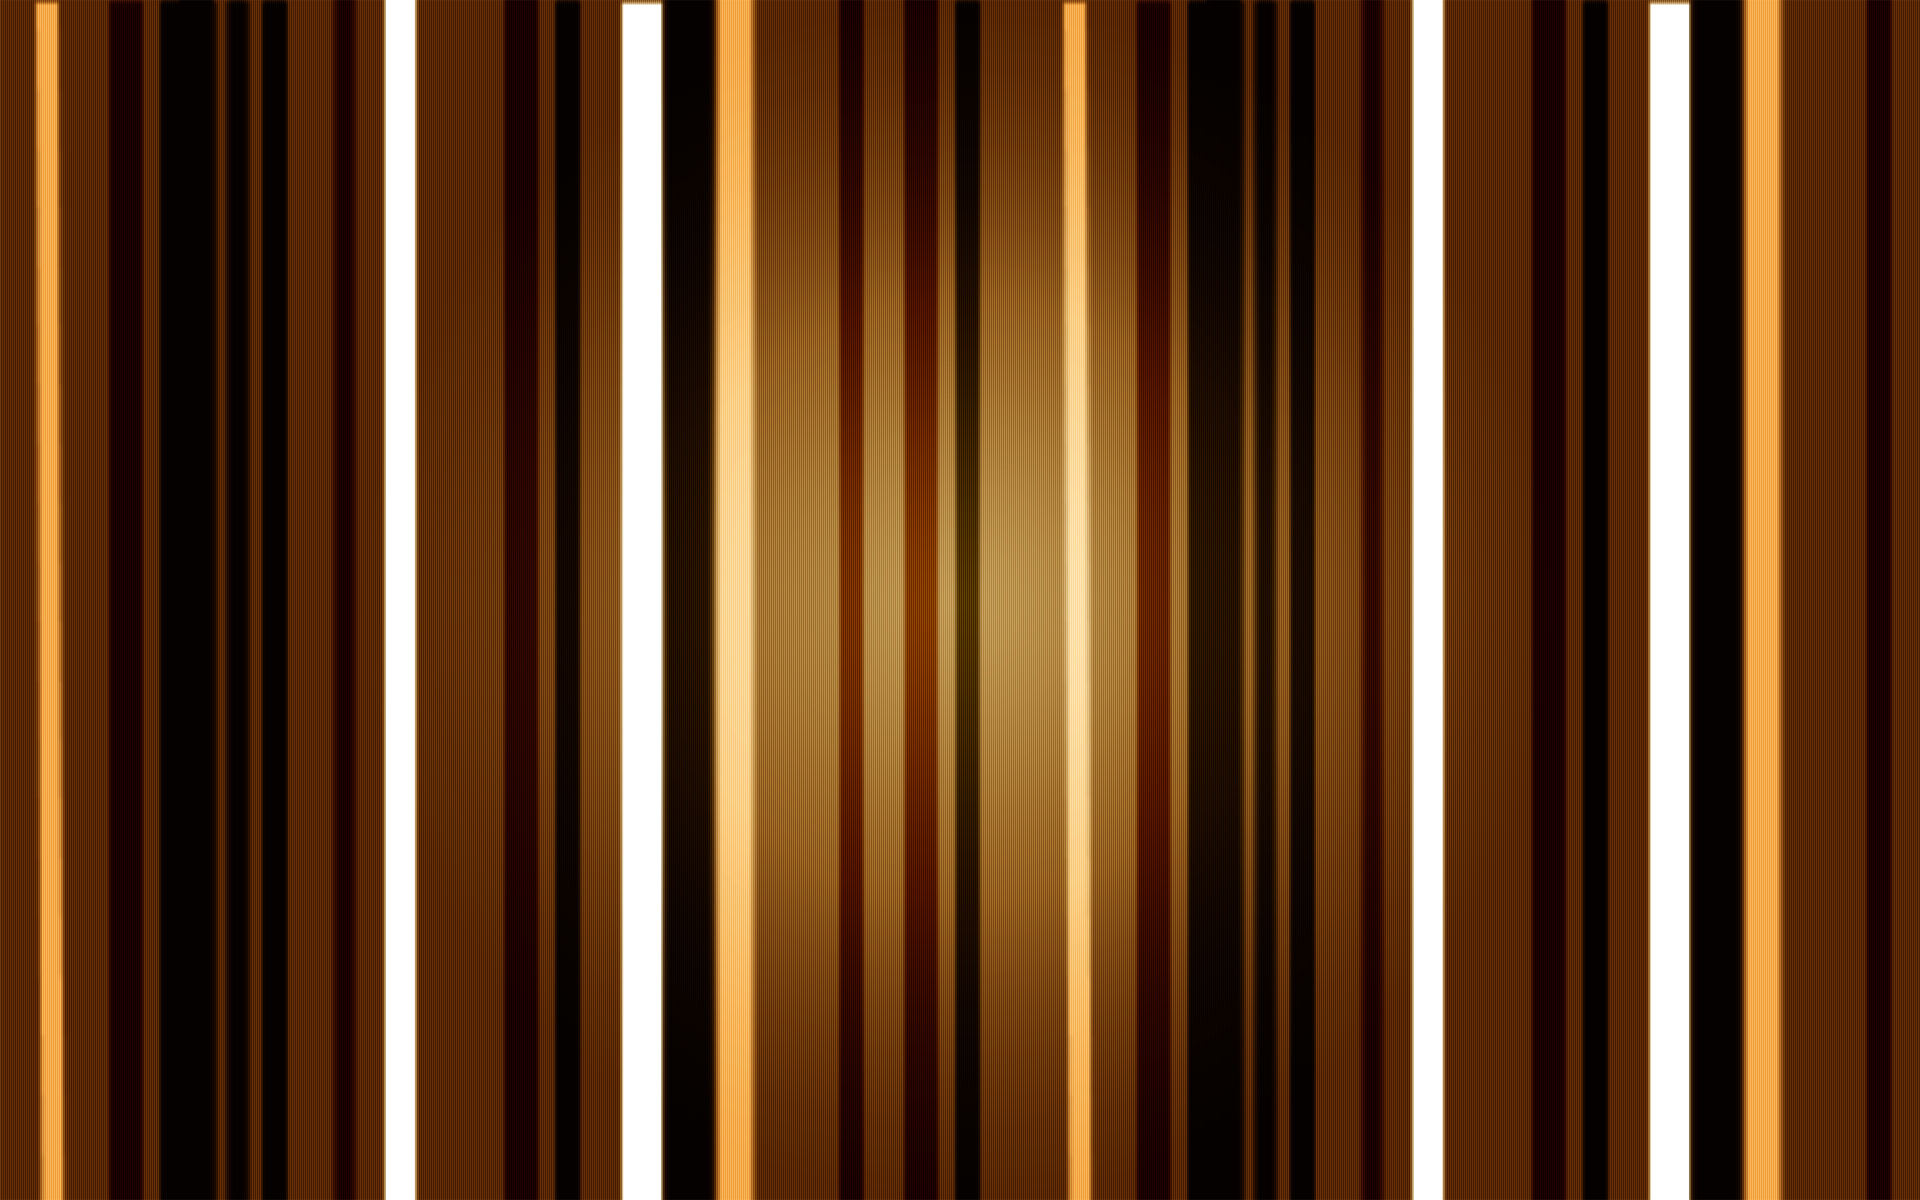 Colorful Stripes Wallpaper